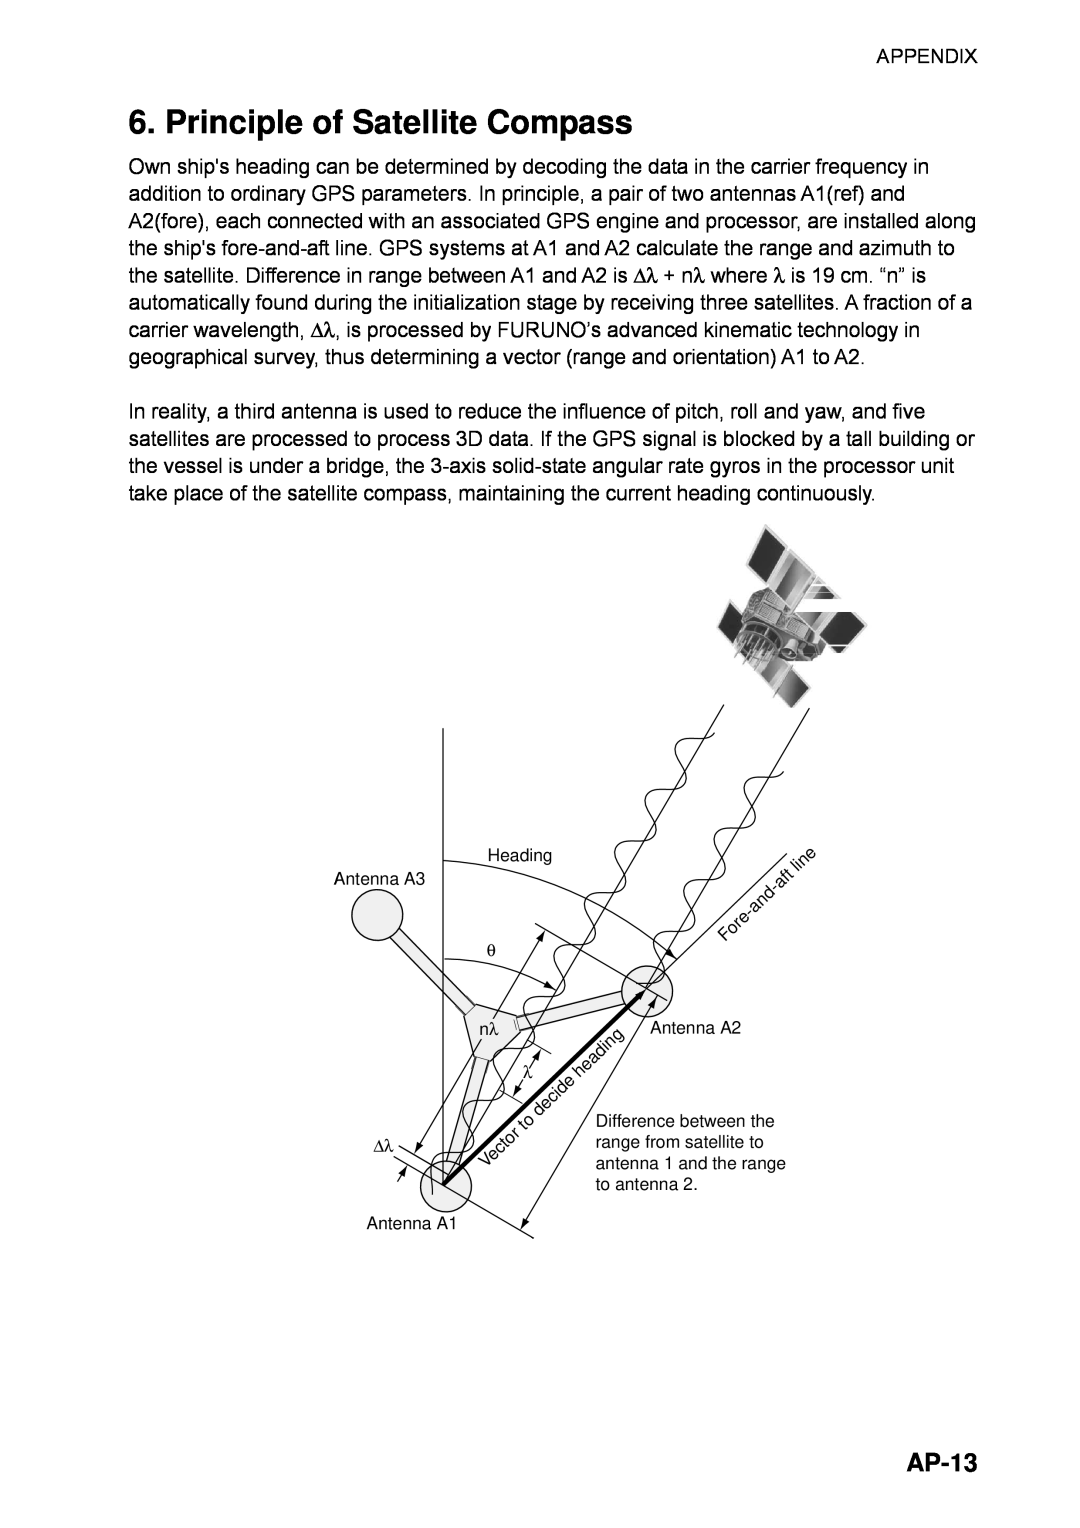 Furuno SC-110 manual Principle of Satellite Compass, AP-13 